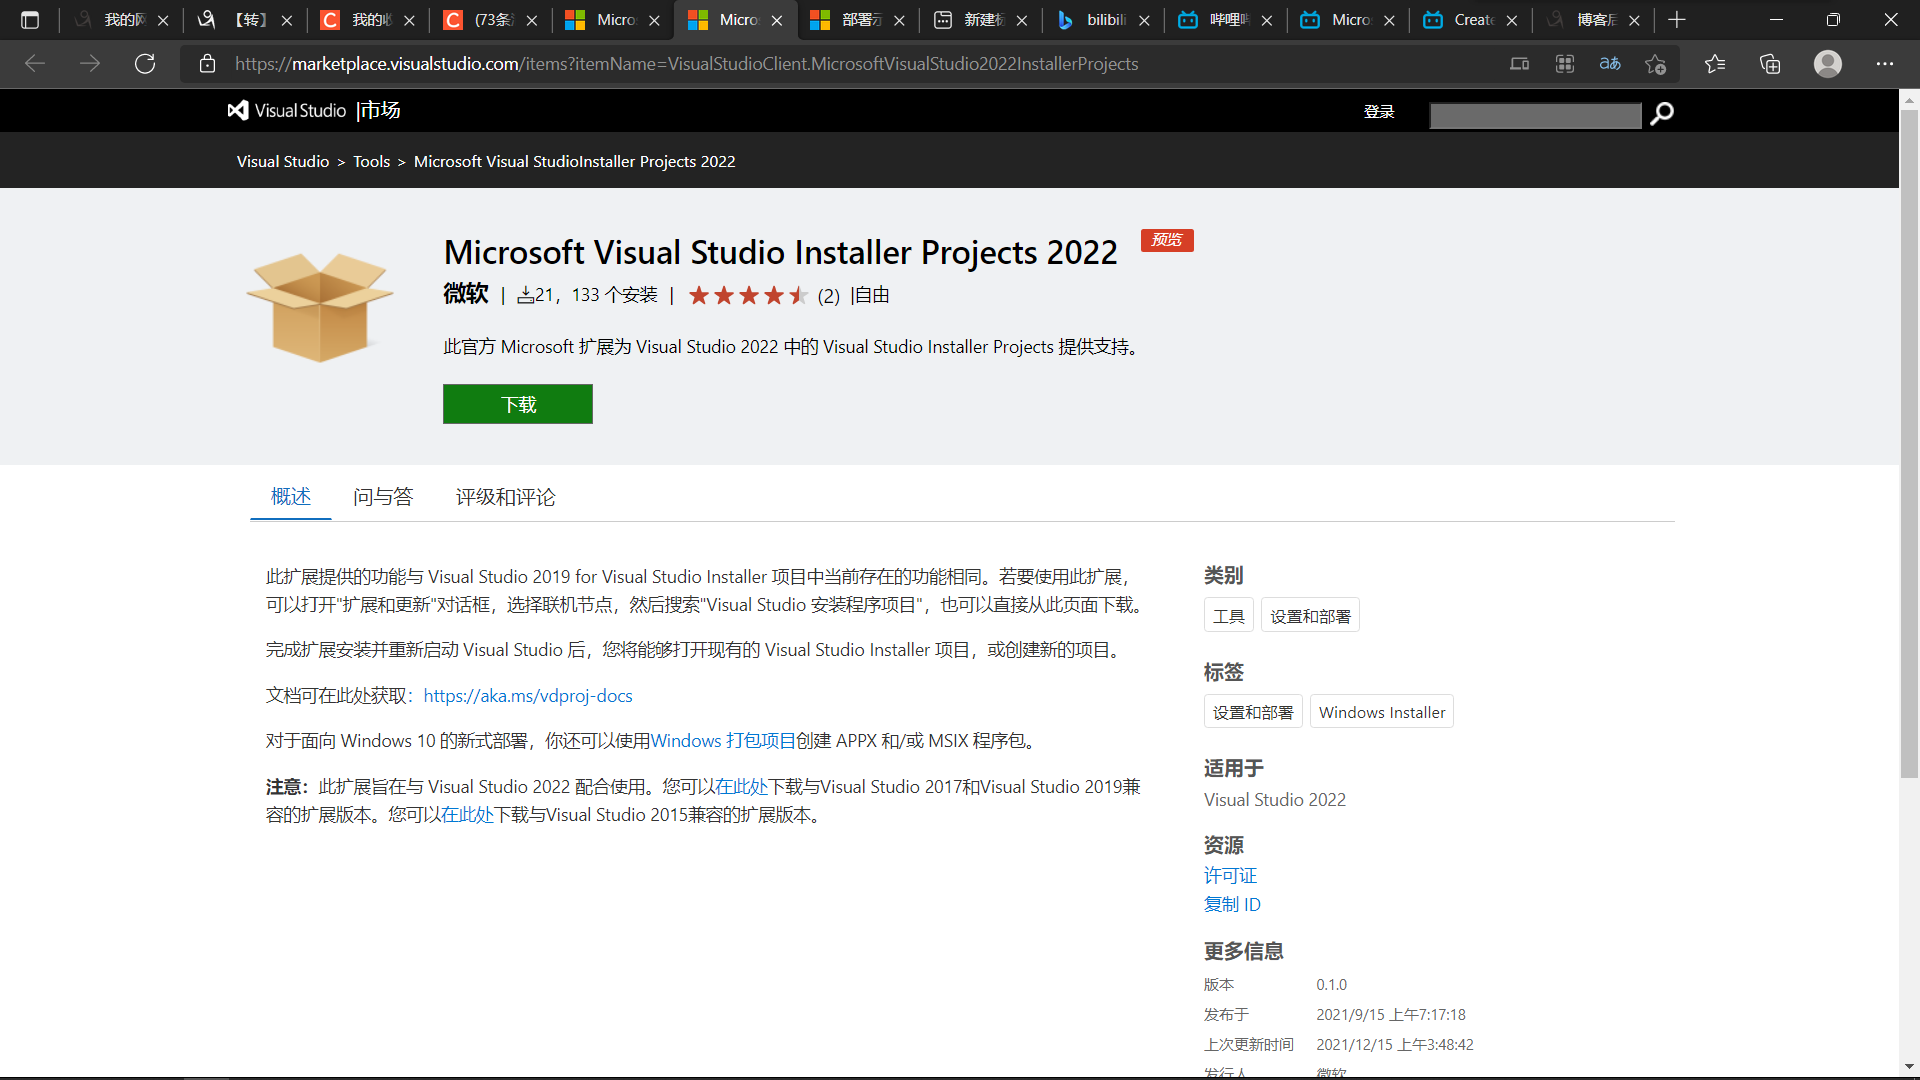 visual studio 2022 installer projects